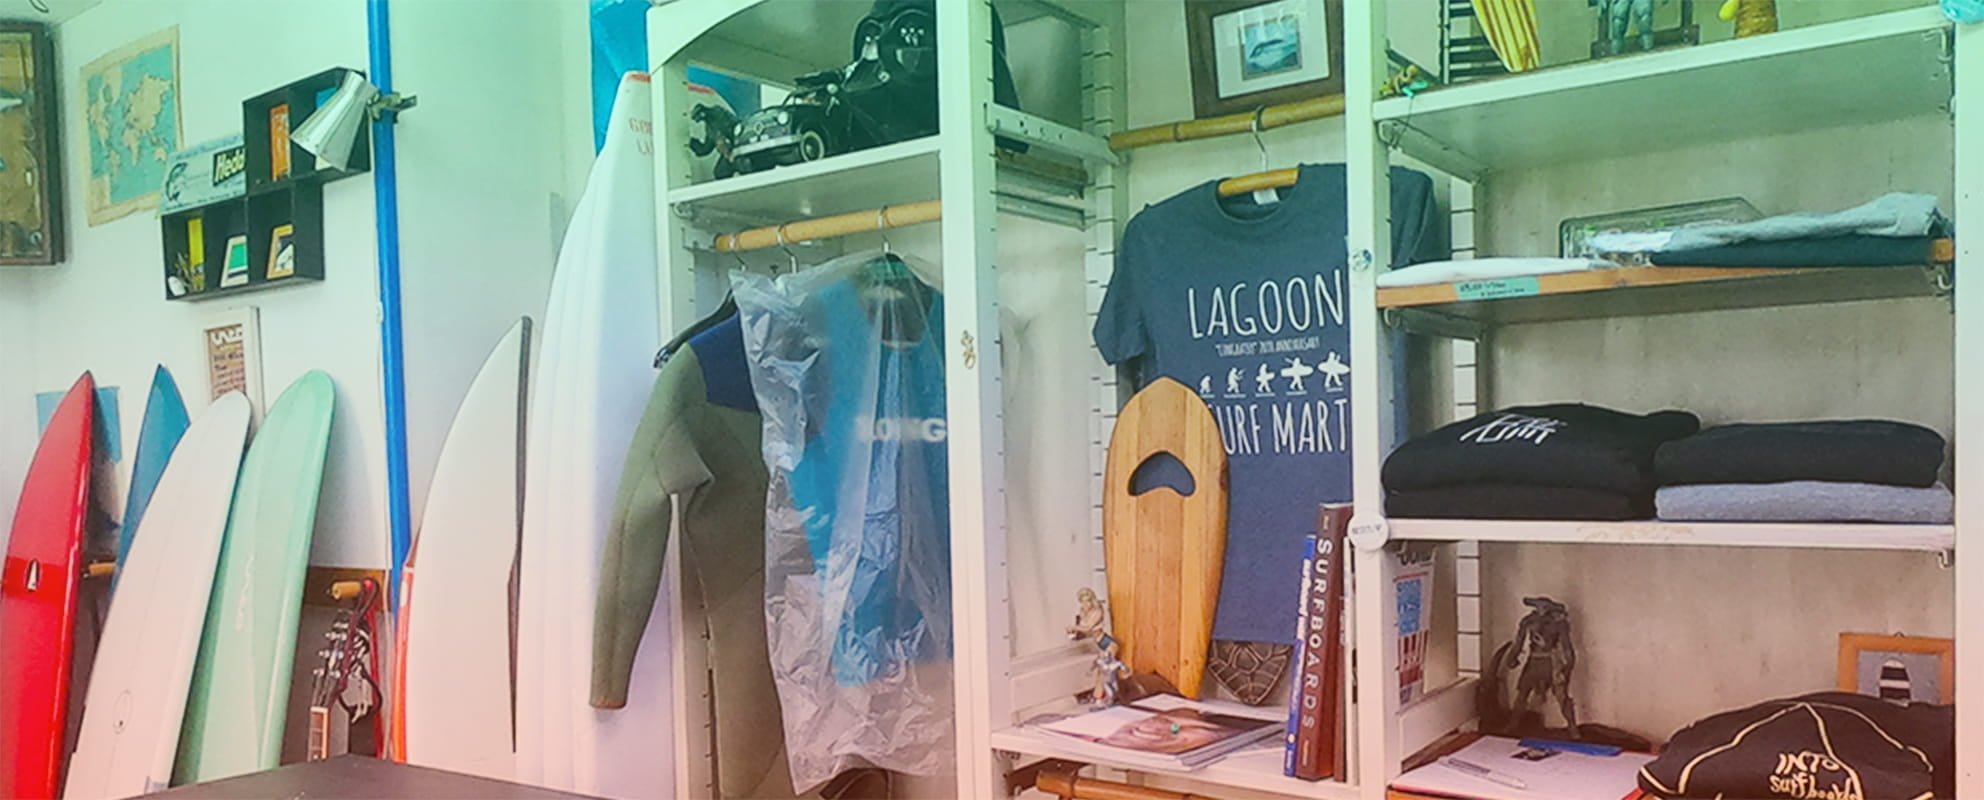 Lagoon surf mart（ラグーンサーフマート）店内